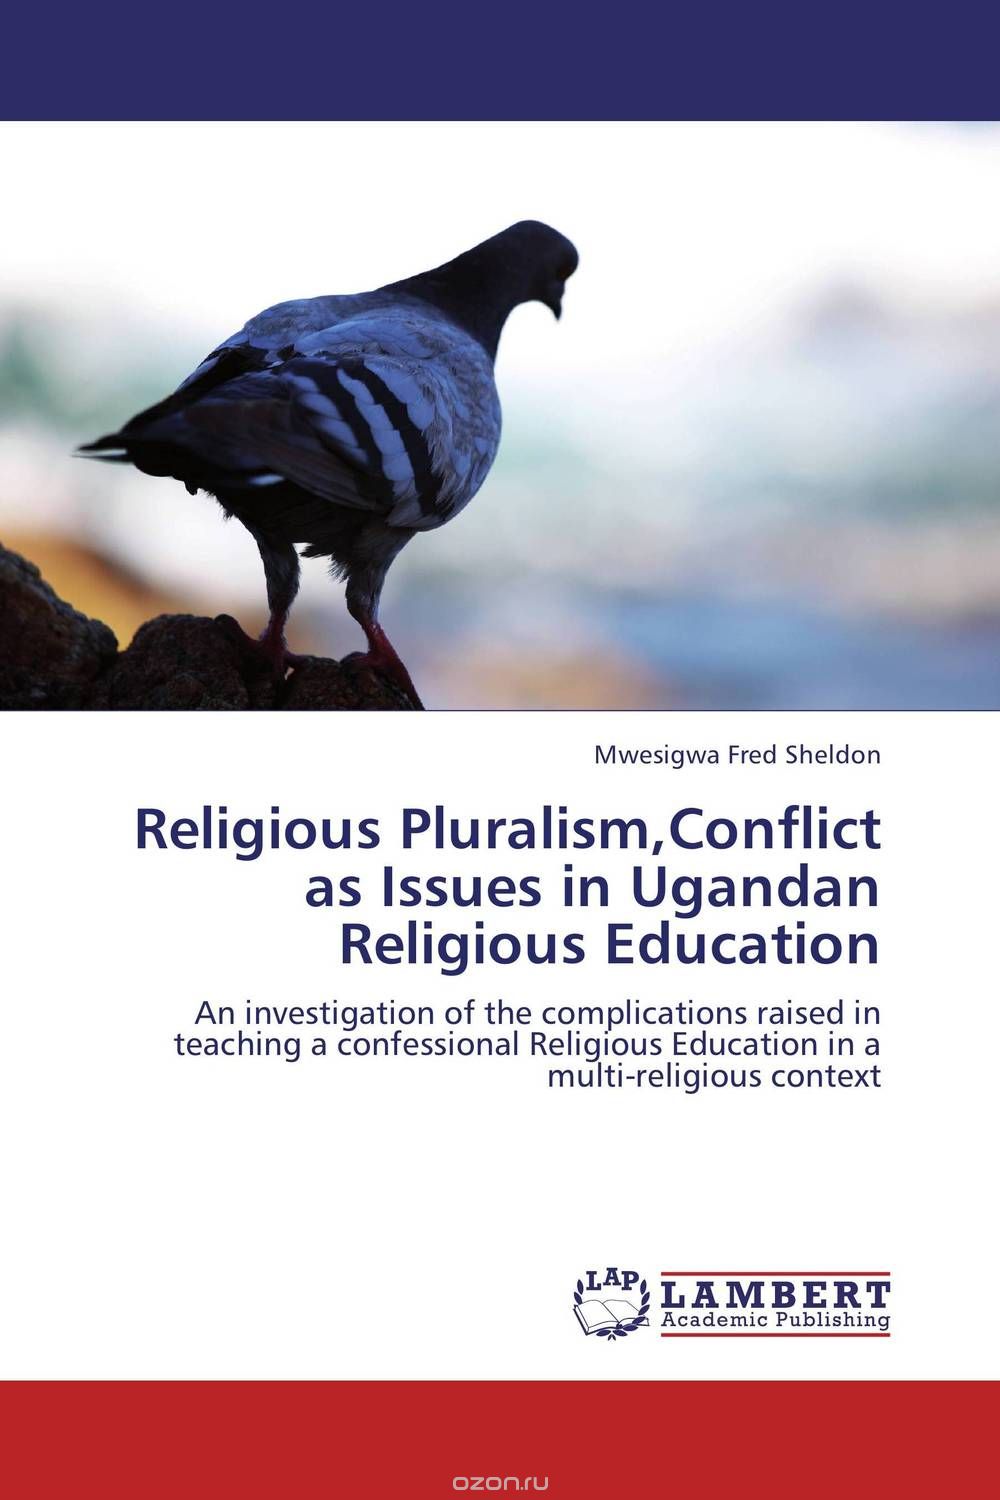 Скачать книгу "Religious Pluralism,Conflict as Issues in Ugandan Religious Education"